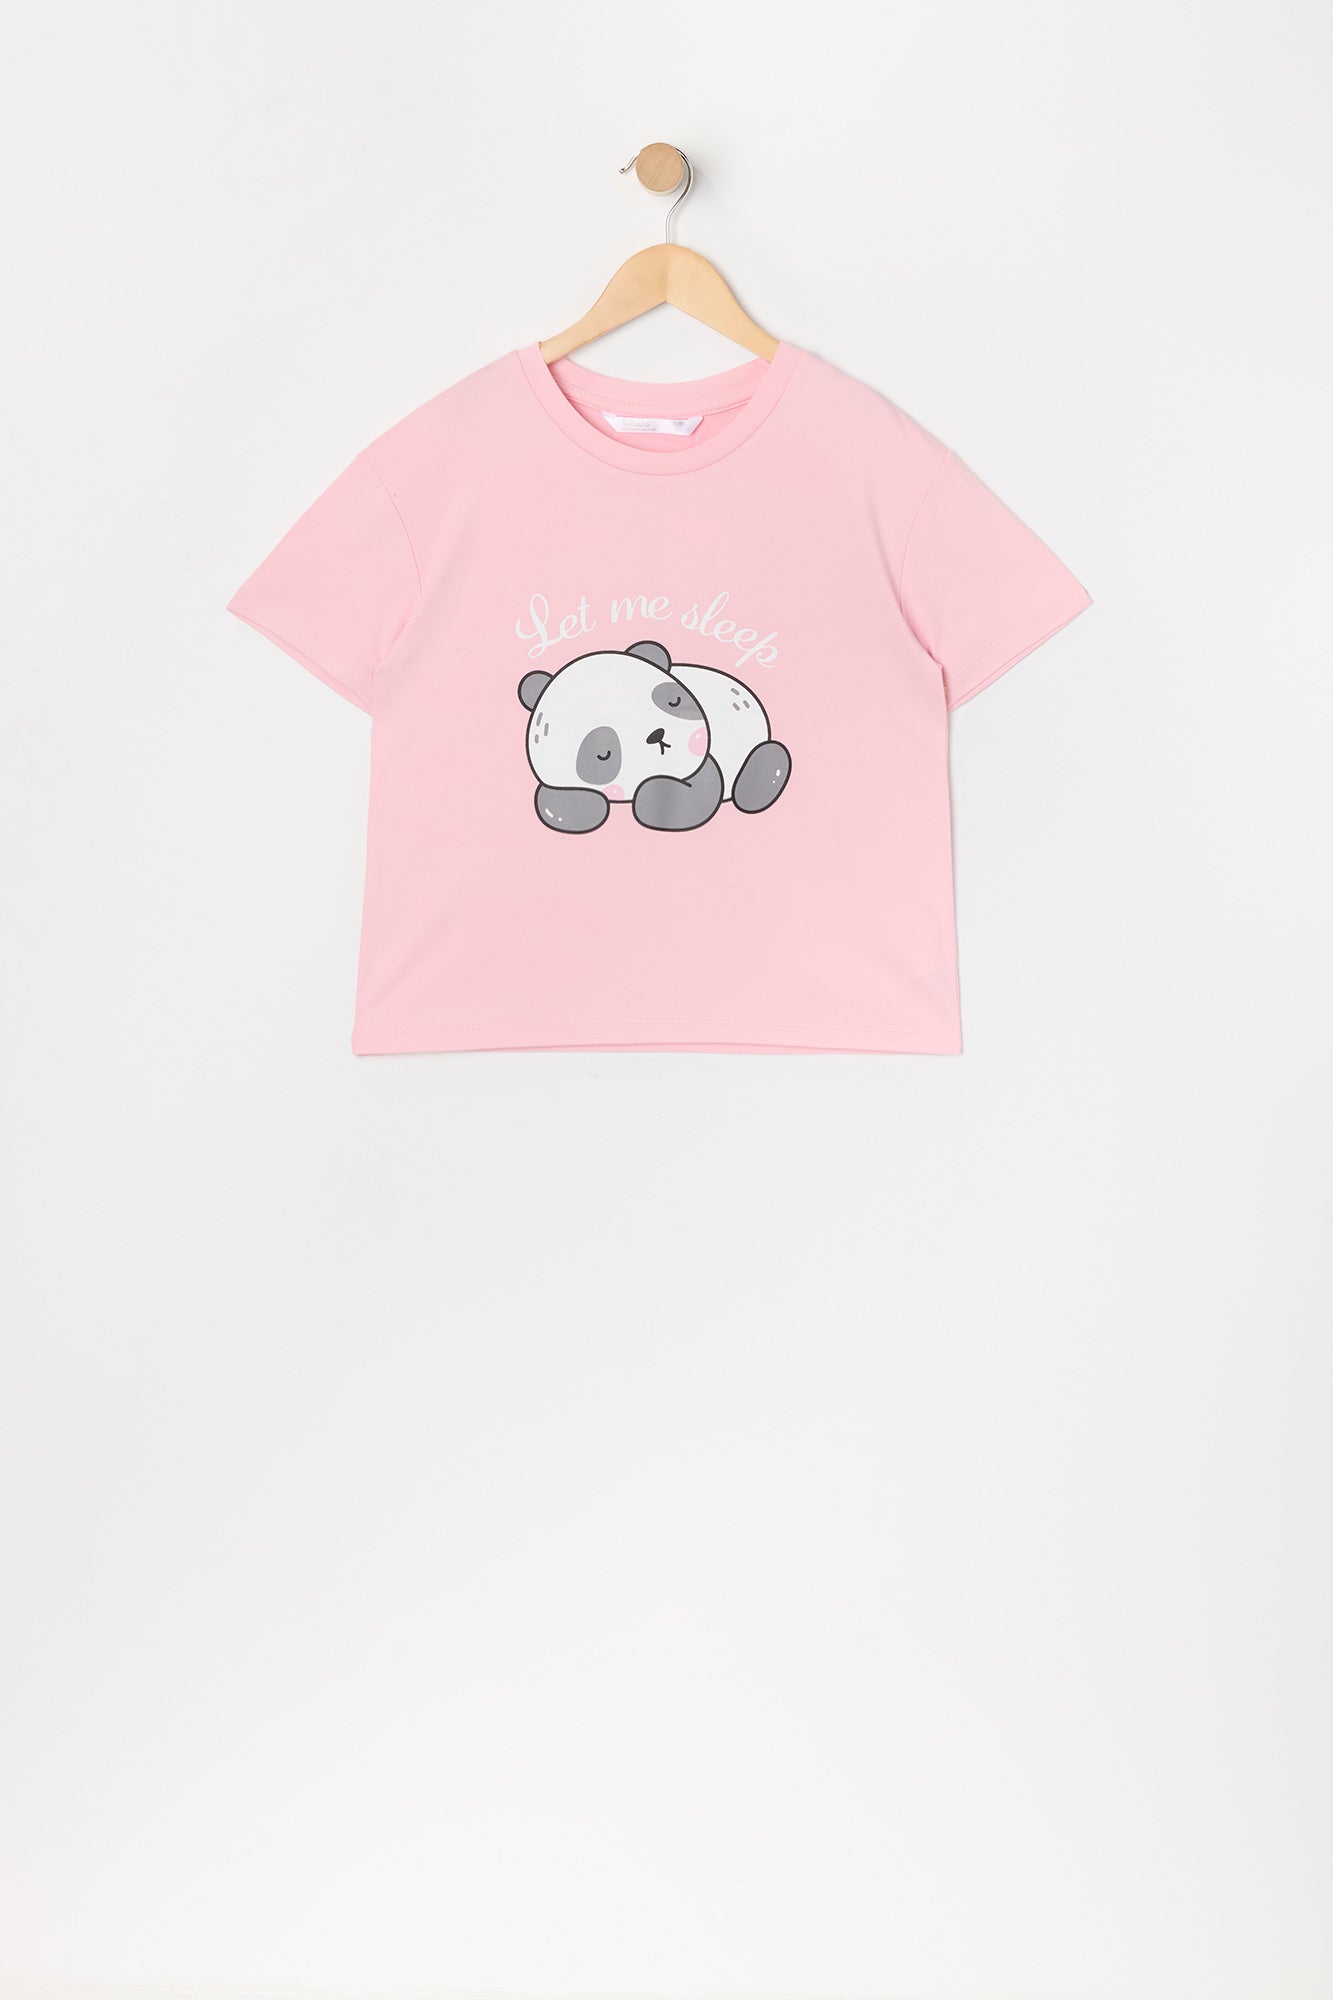 Girls Sleepy Panda Graphic T-Shirt and Pant 2 Piece Pajama Set